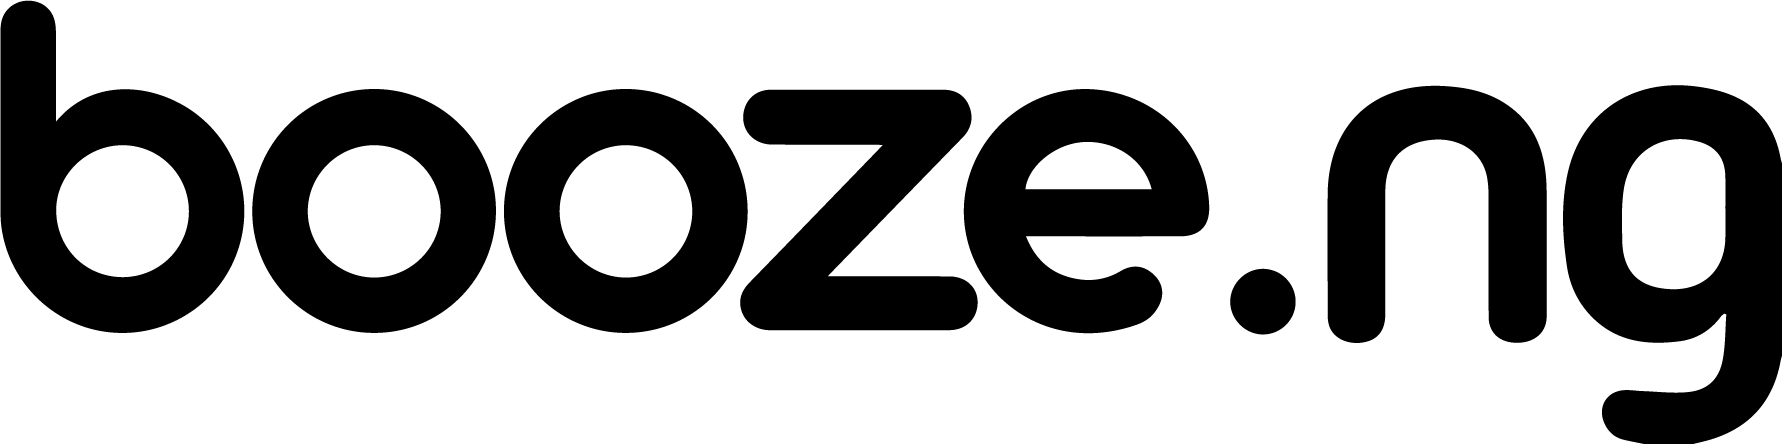 booze-logo